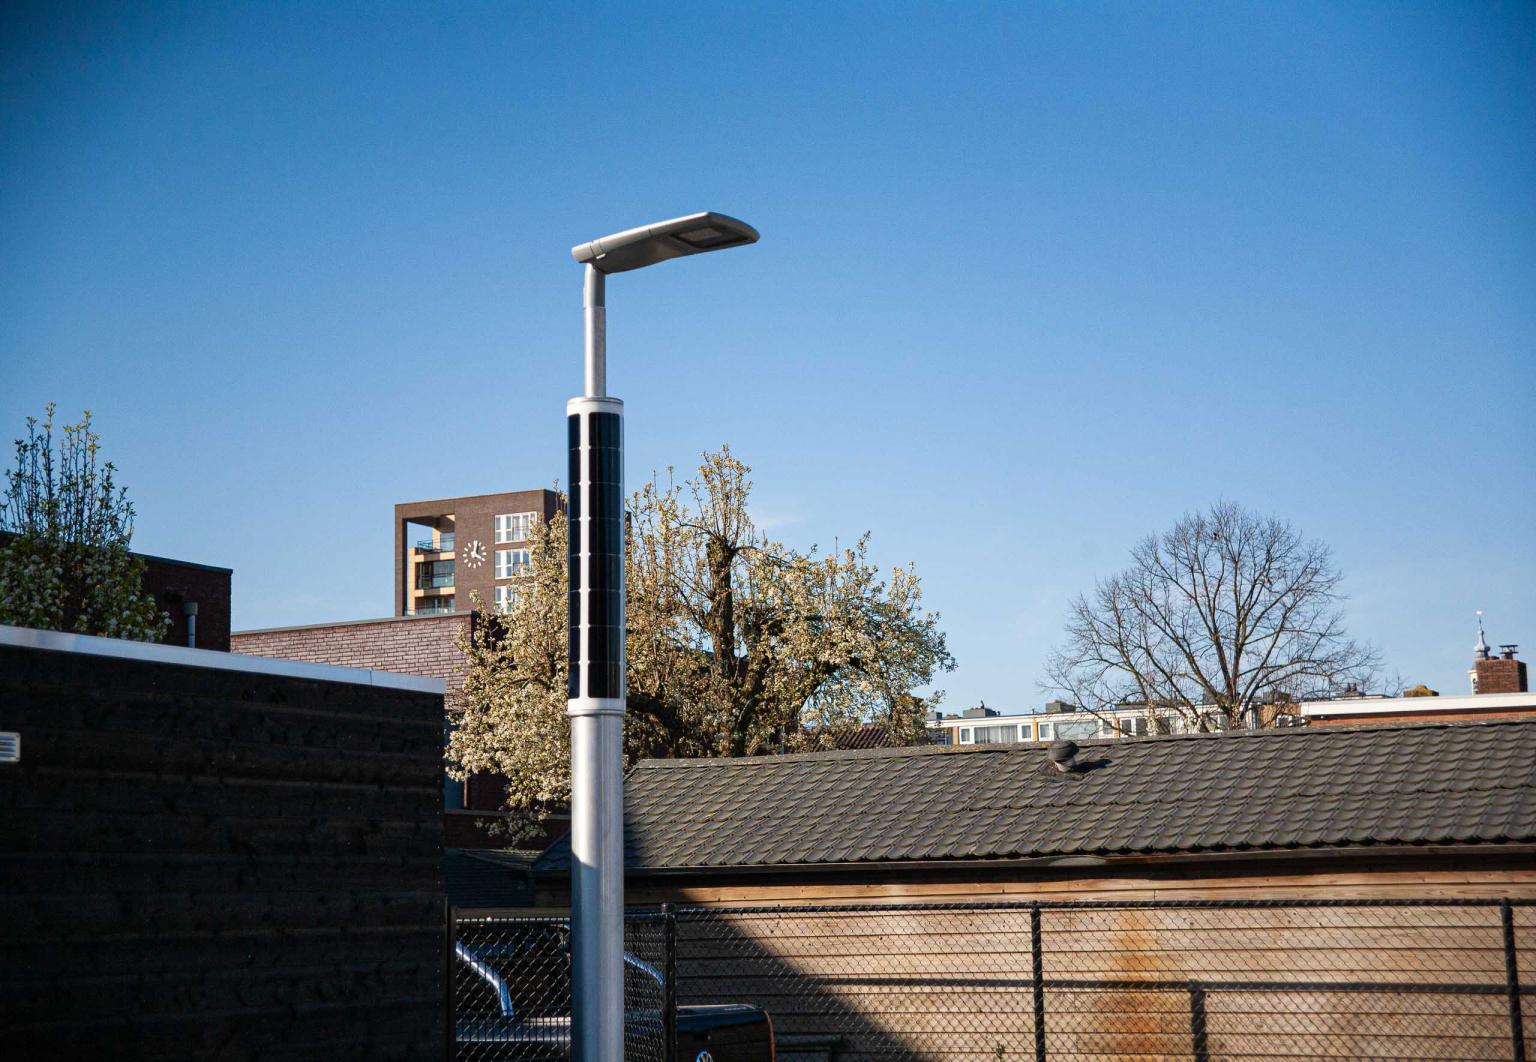 Solar-powered parking lot lighting